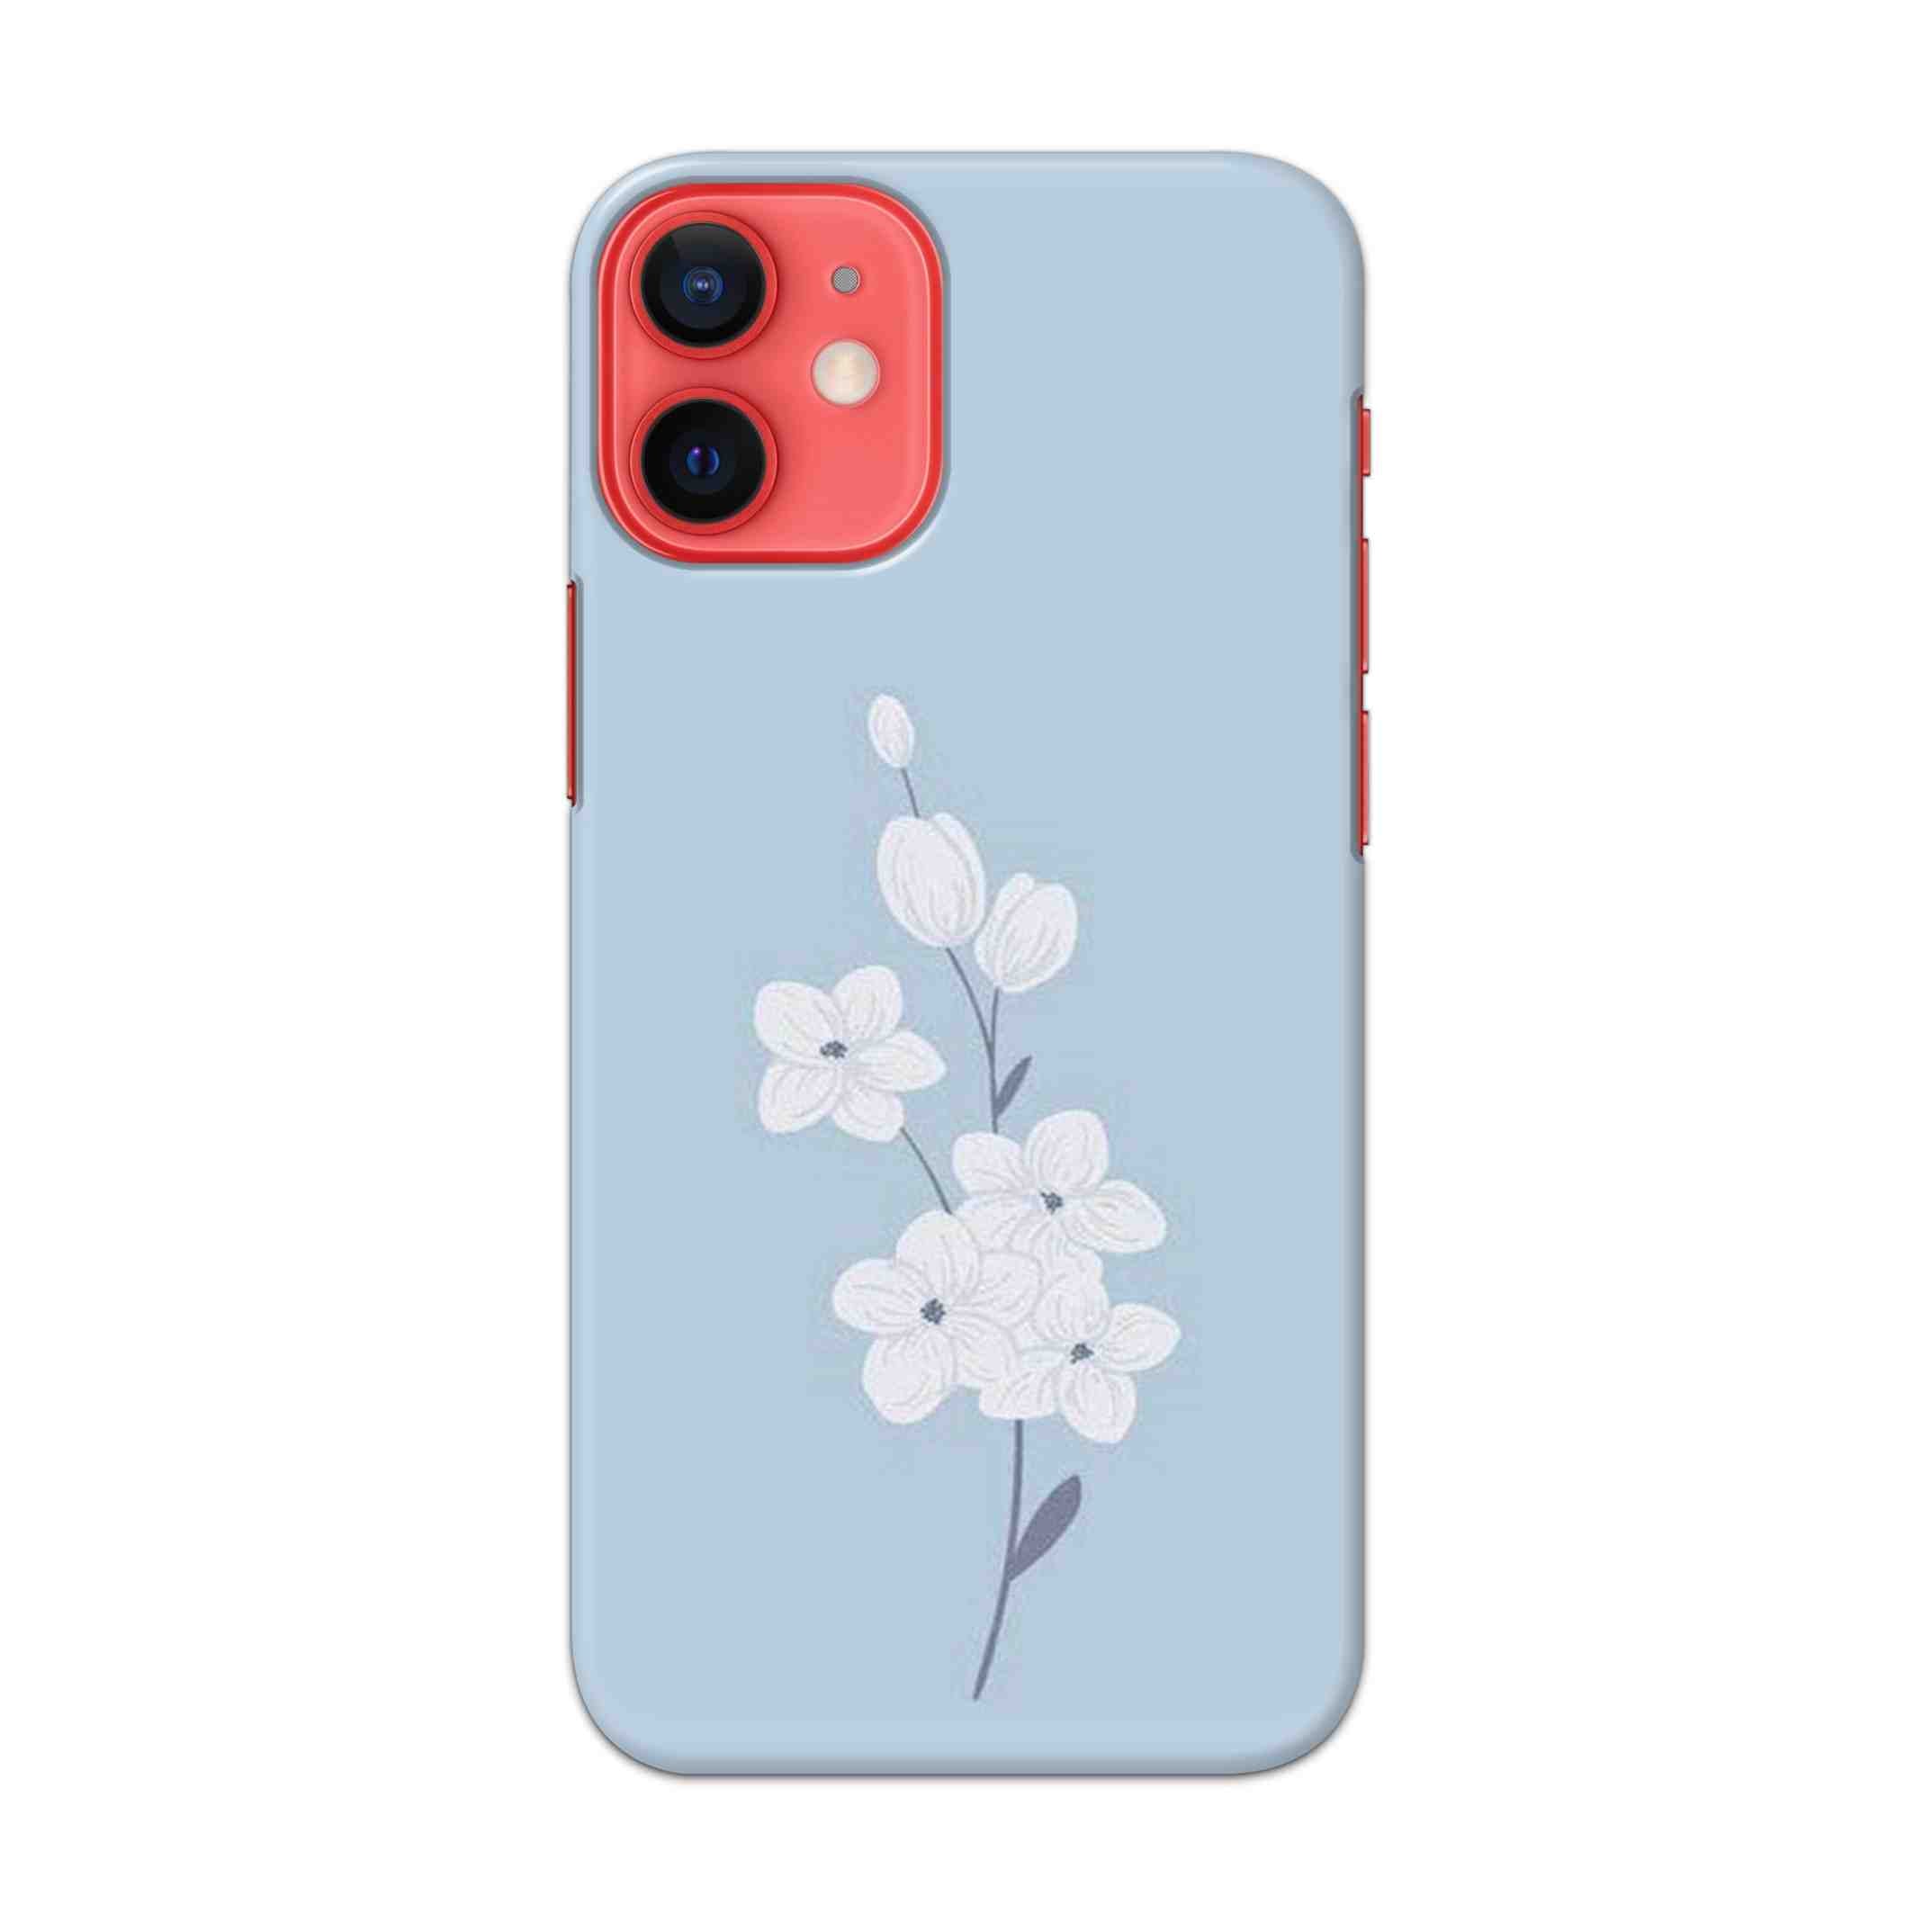 Buy White Flower Hard Back Mobile Phone Case Cover For Apple iPhone 12 Online